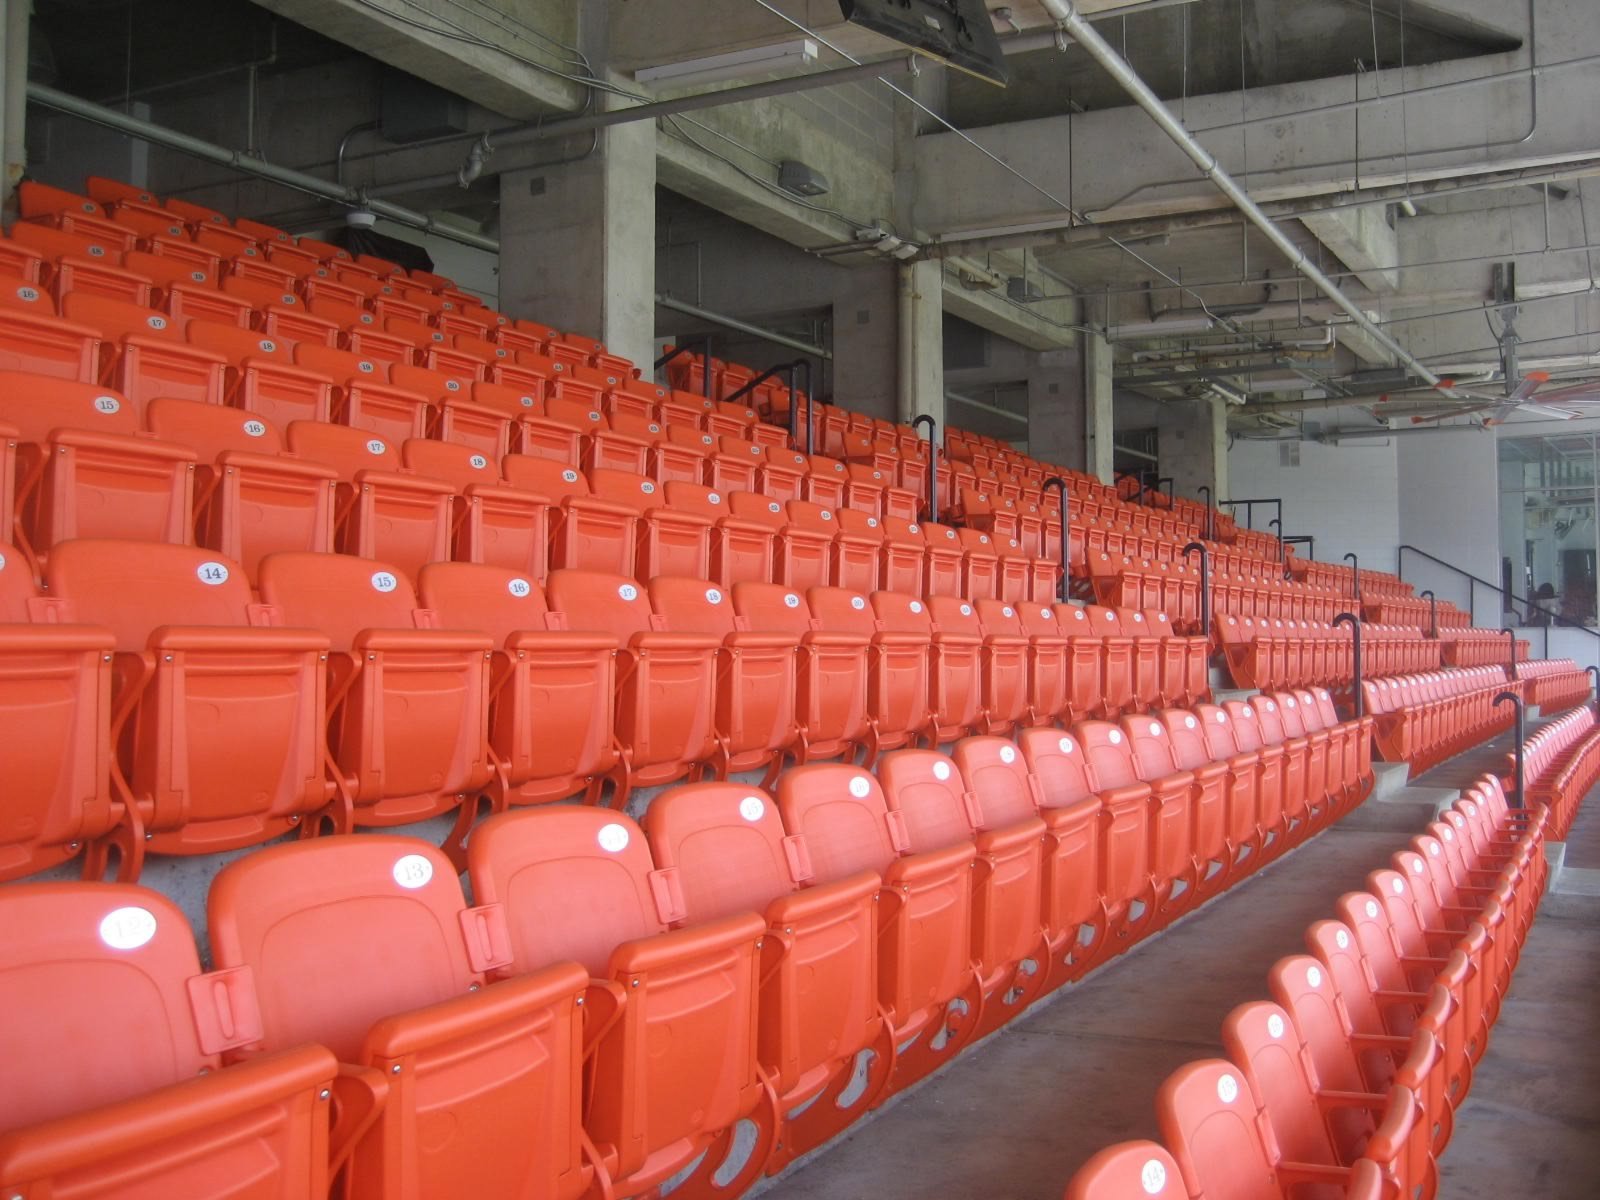 Auburn Tigers Stadium Seating Chart